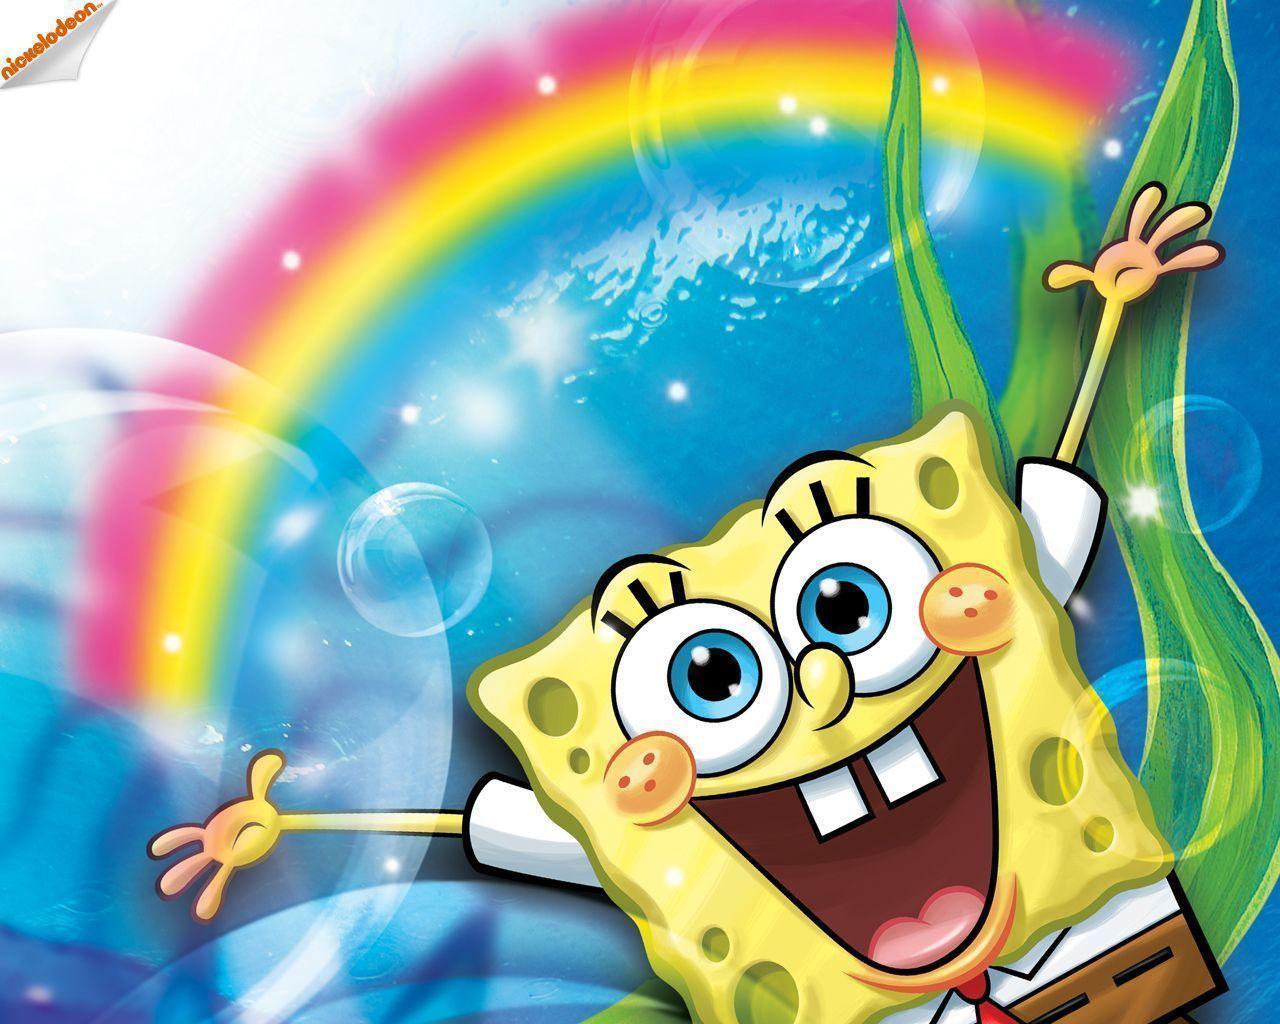 Wallpaper ID 416540  TV Show Spongebob Squarepants Phone Wallpaper   1080x1920 free download